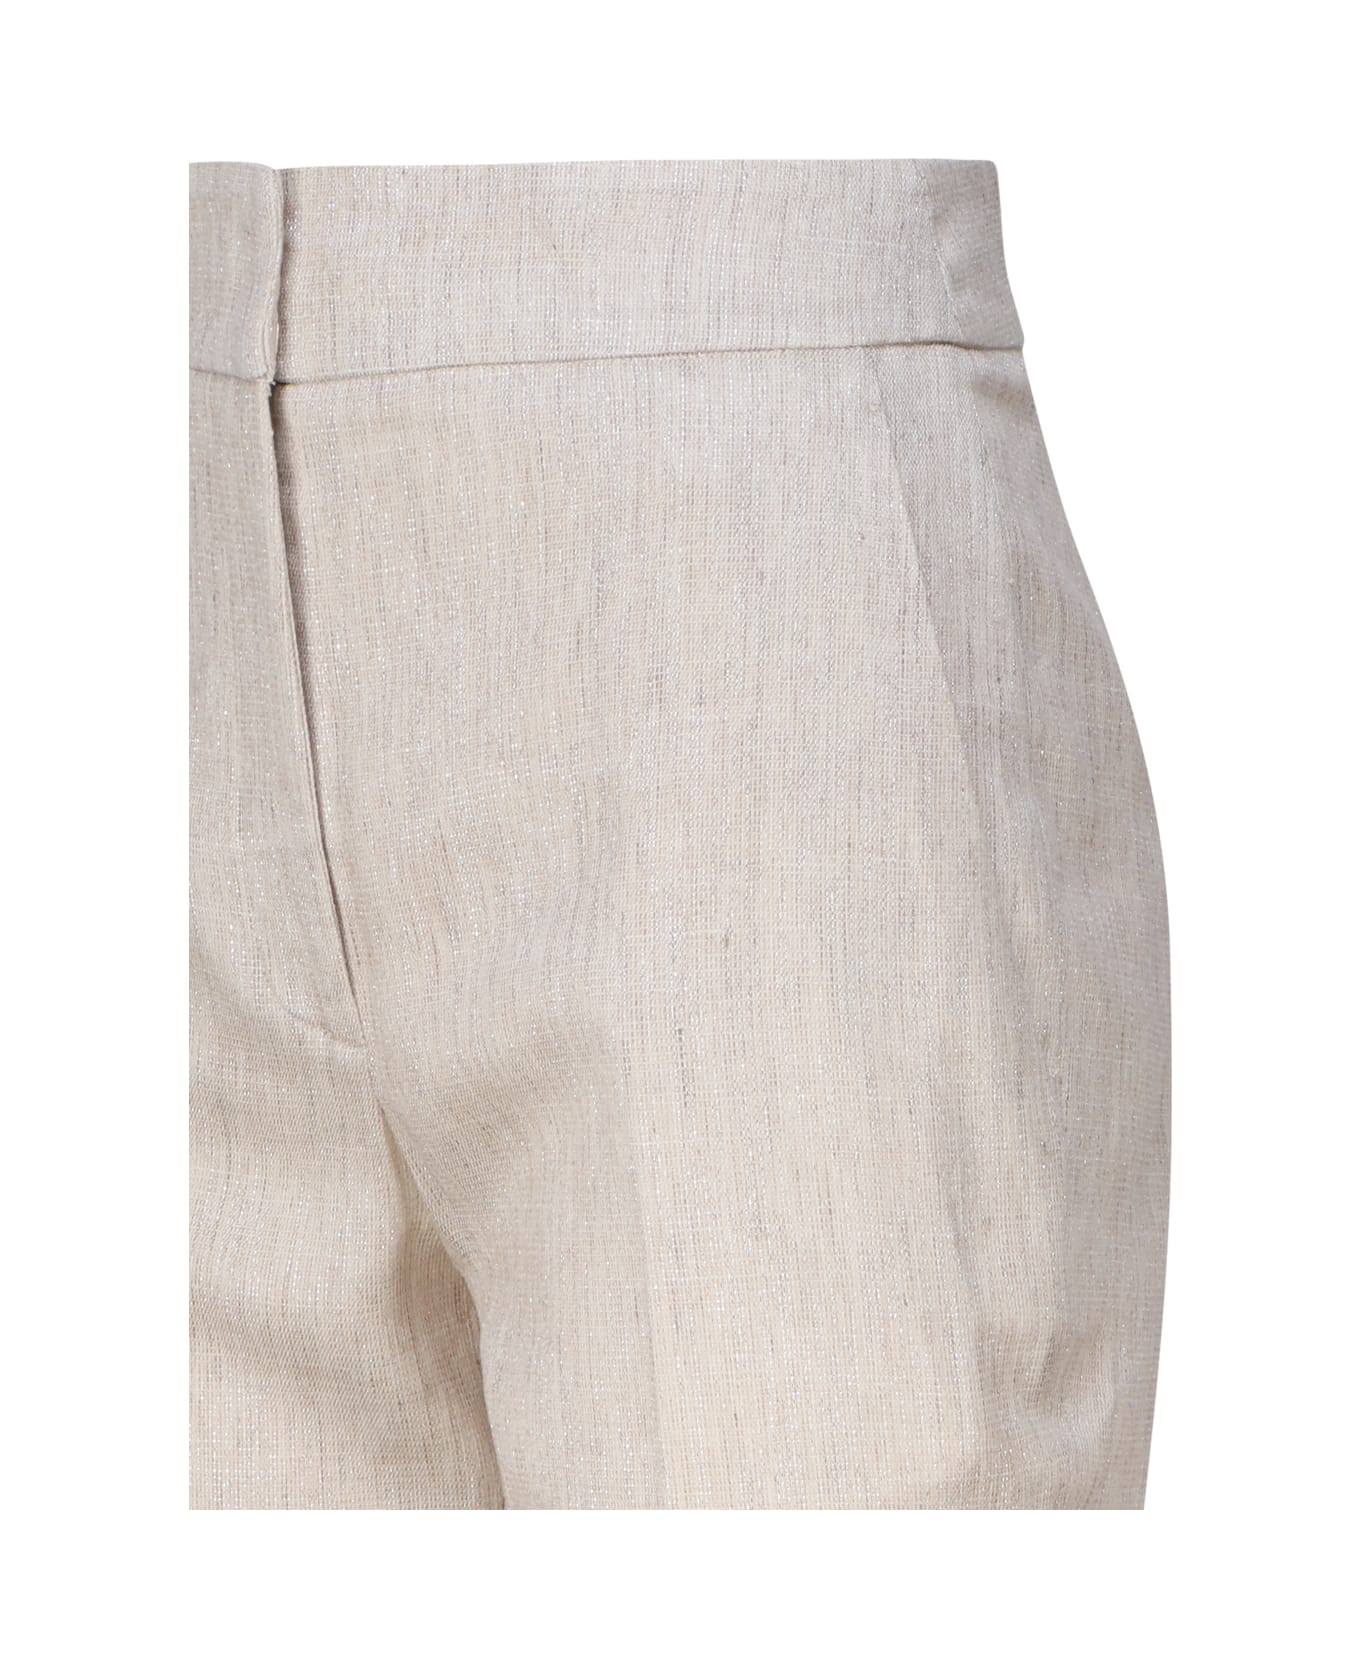 Genny Linen Blend Tailored Pants